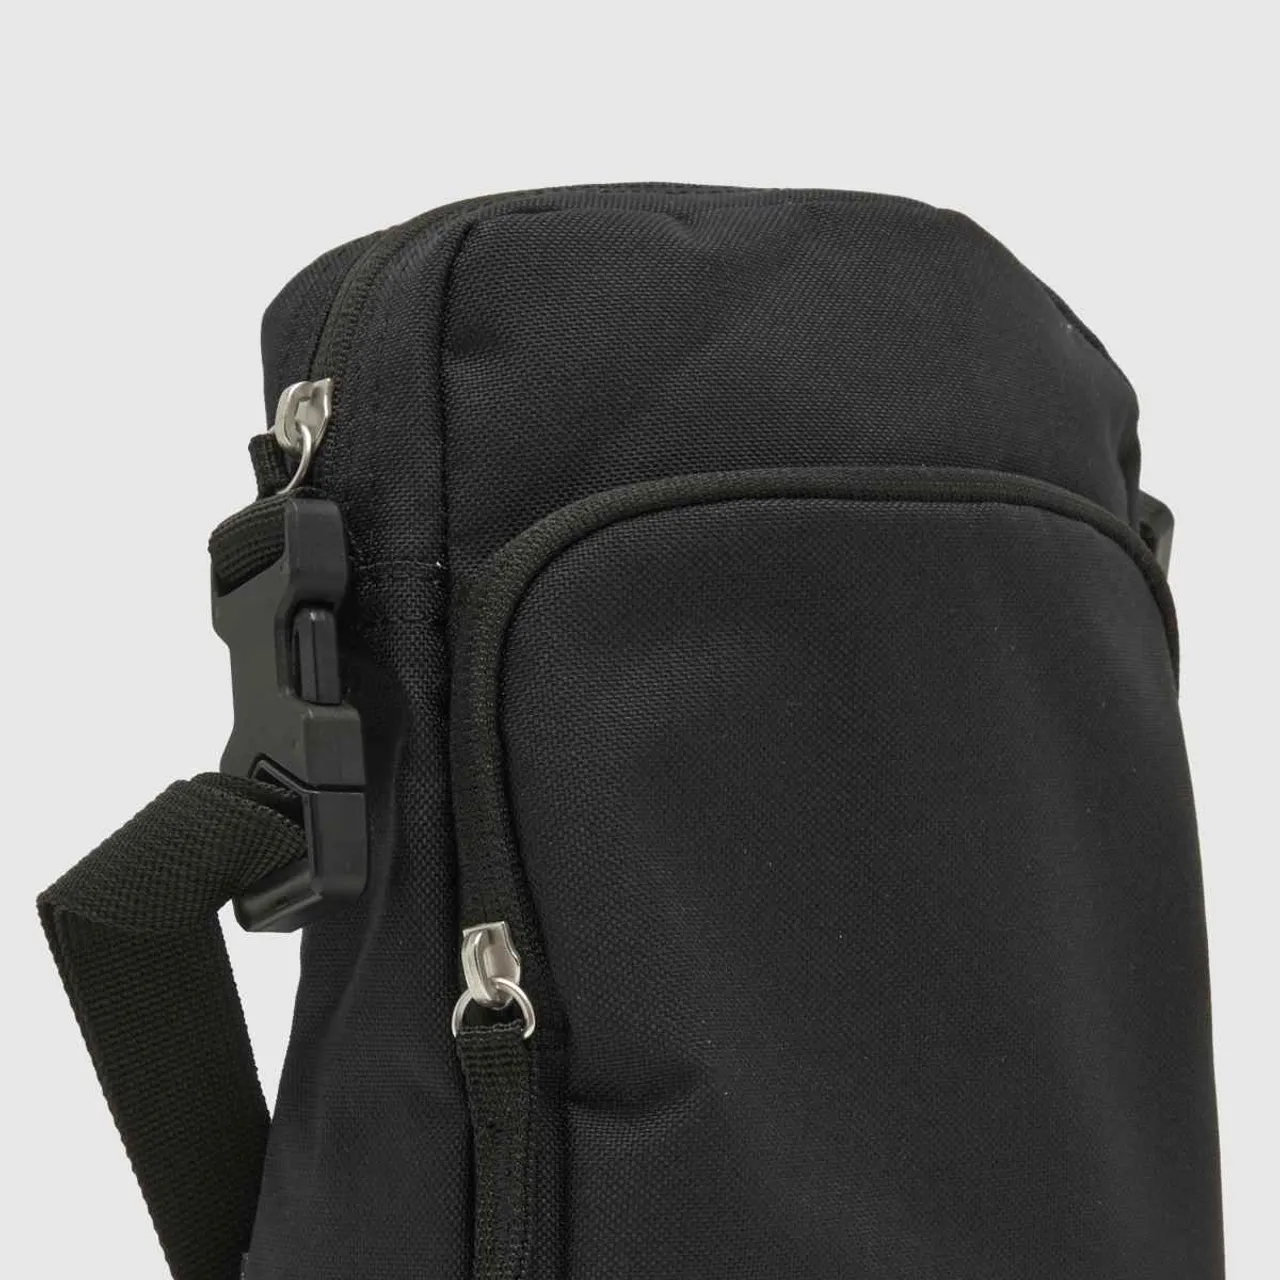 Nike Black and White Heritage Crossbody Bag, Size: 23x18x8cm